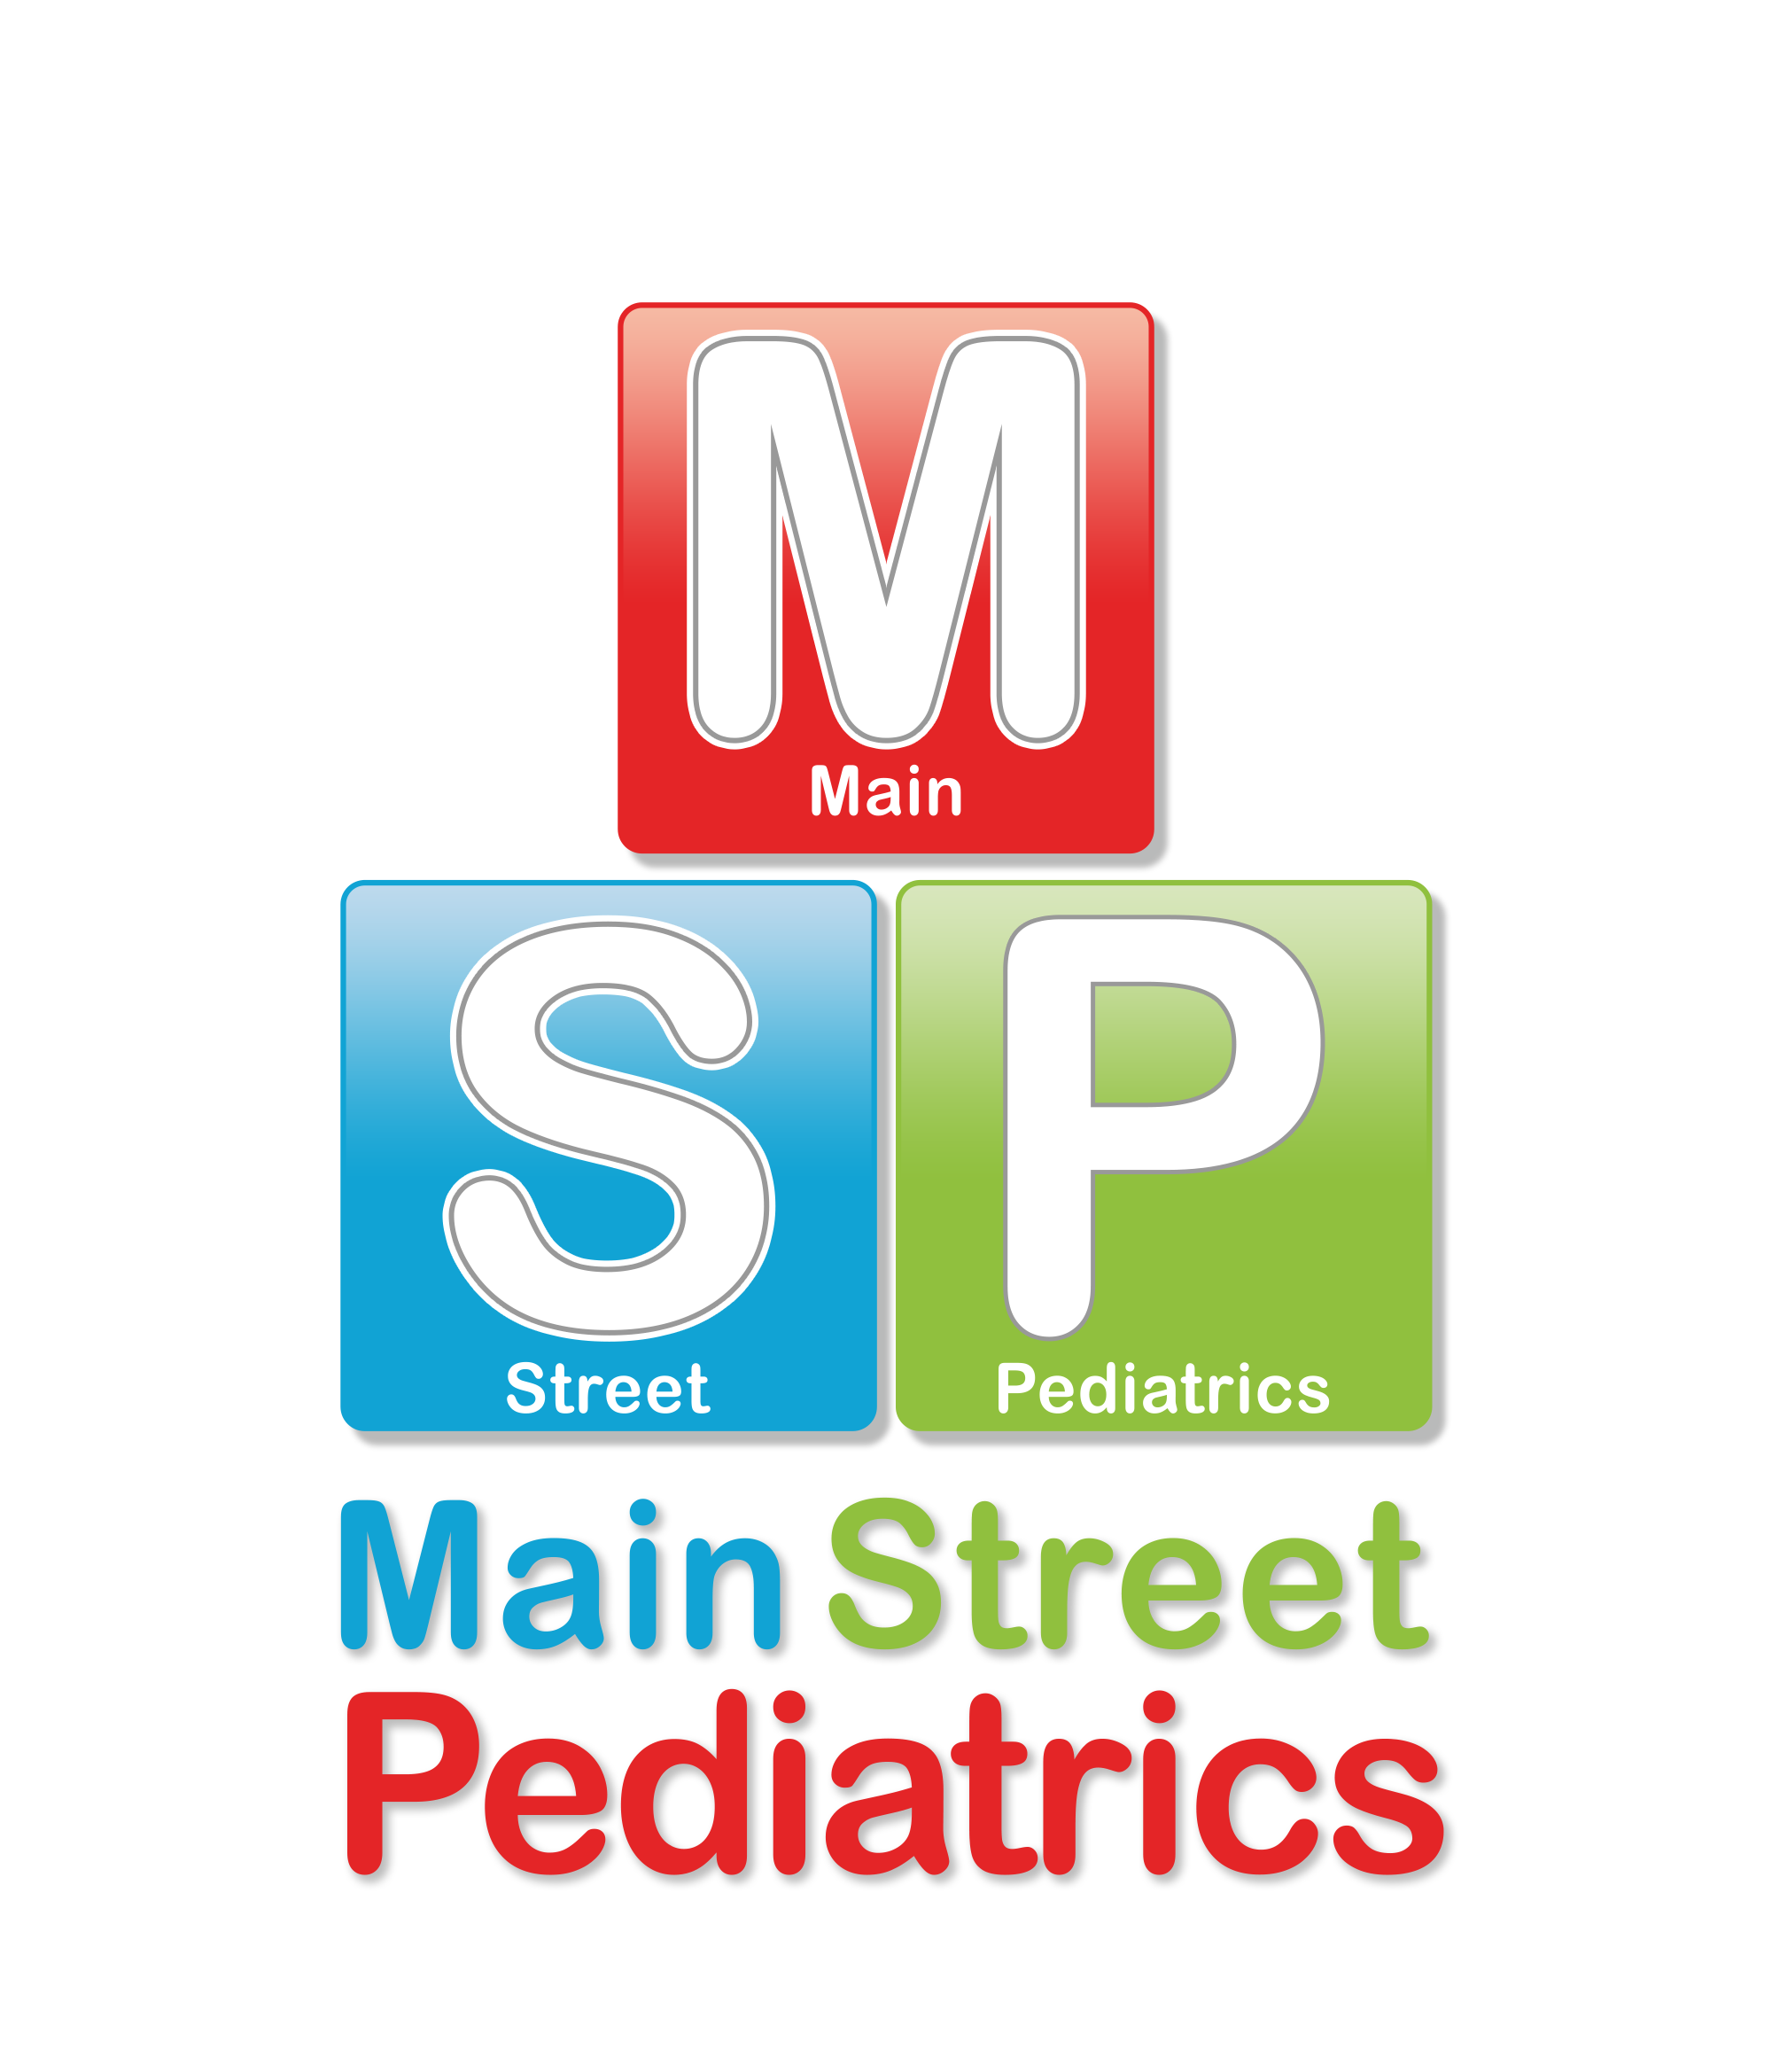 MSP logo